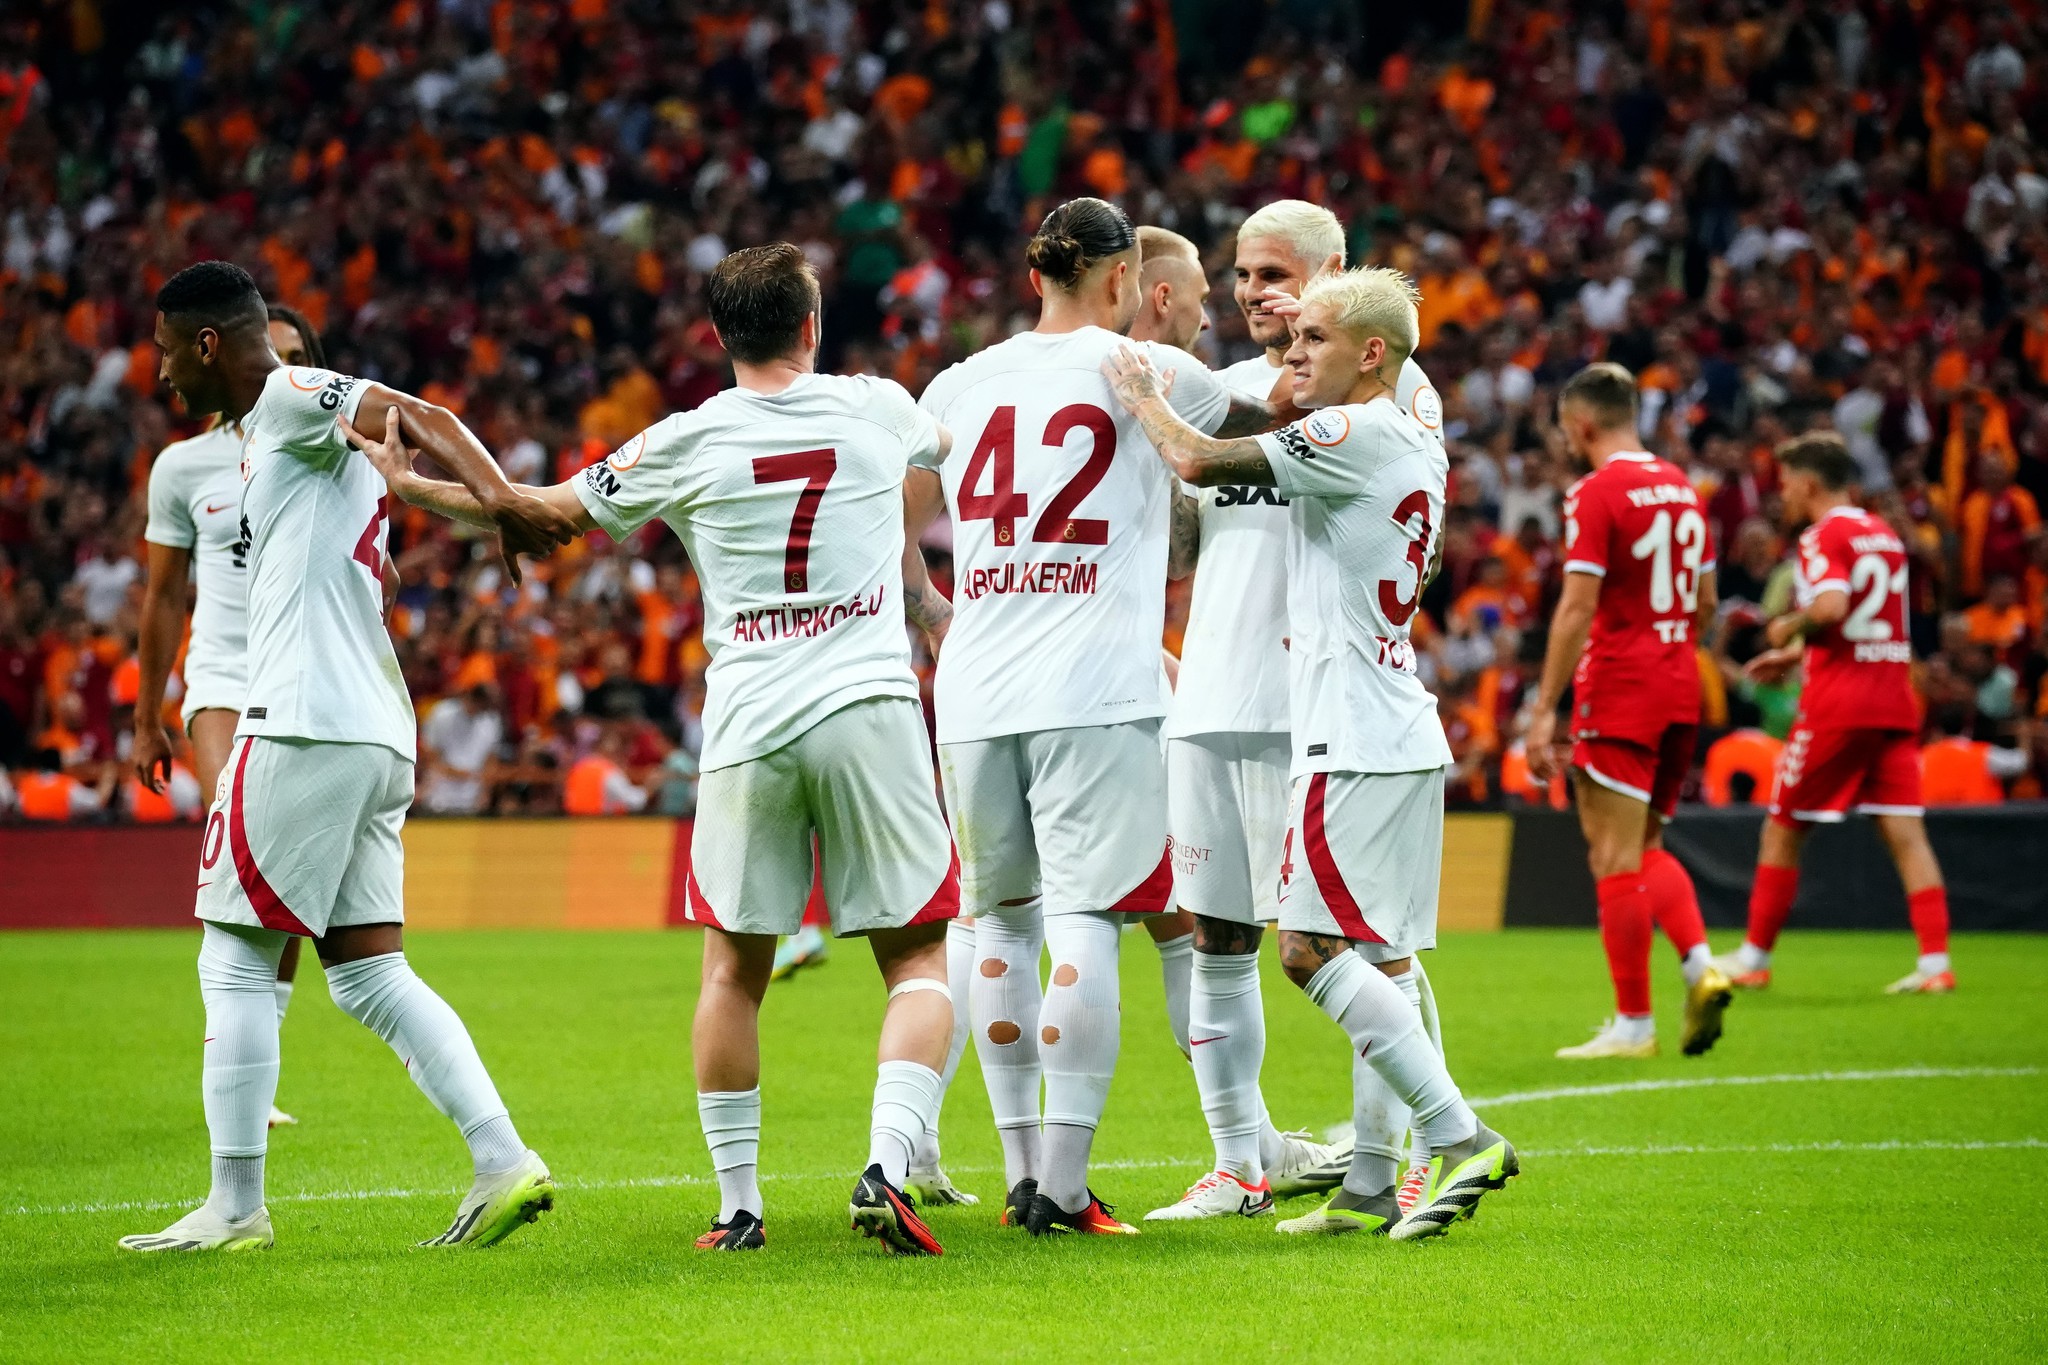 TRANSFER HABERİ | Galatasaray’dan 10 milyon euroluk transfer! Orta sahaya dinamo